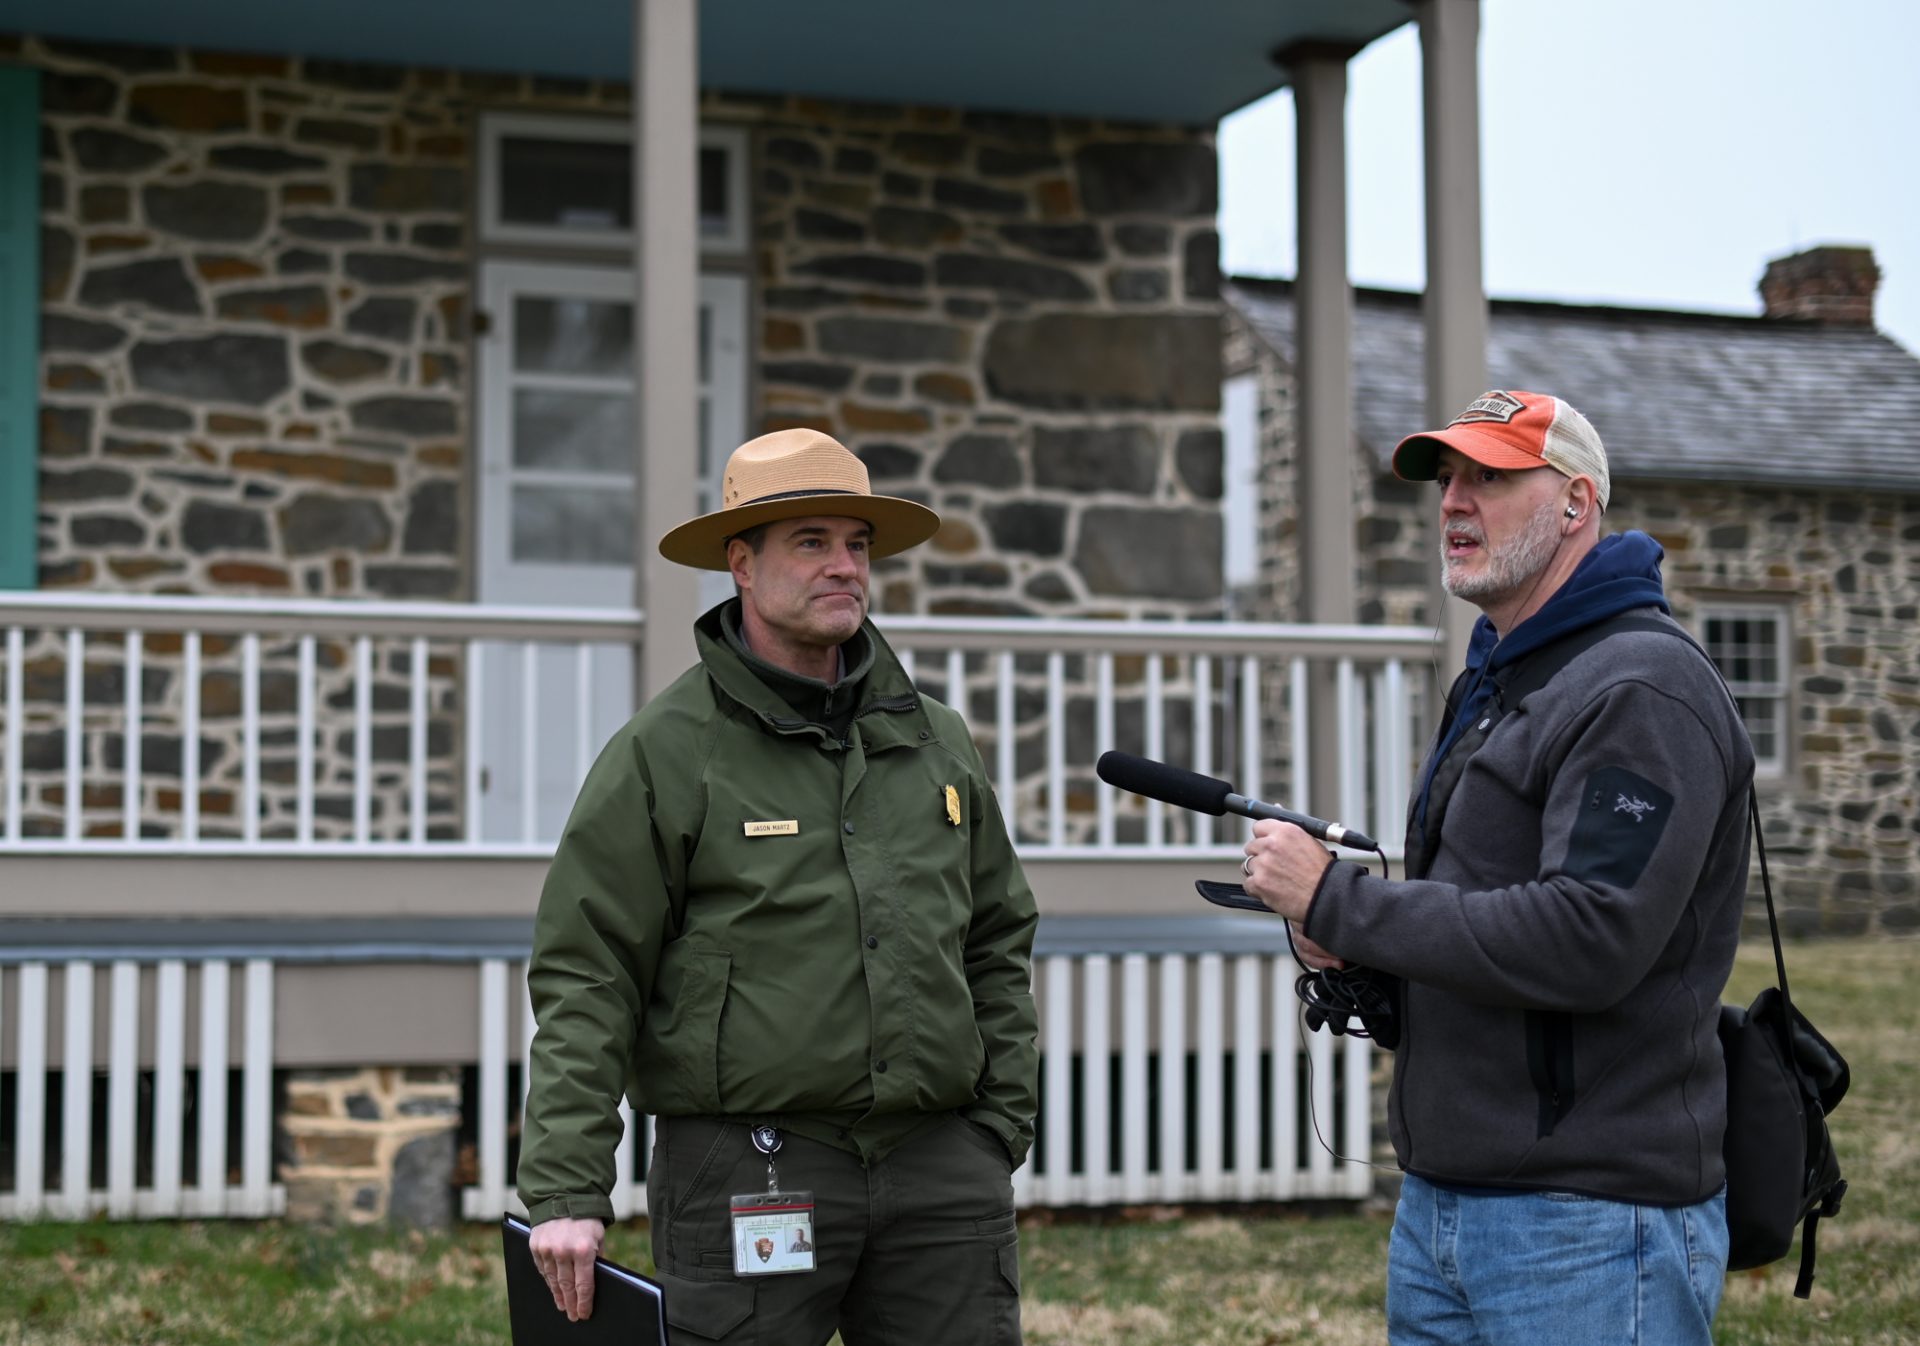 Tim Lambert conducting an interview in Gettysburg, PA.